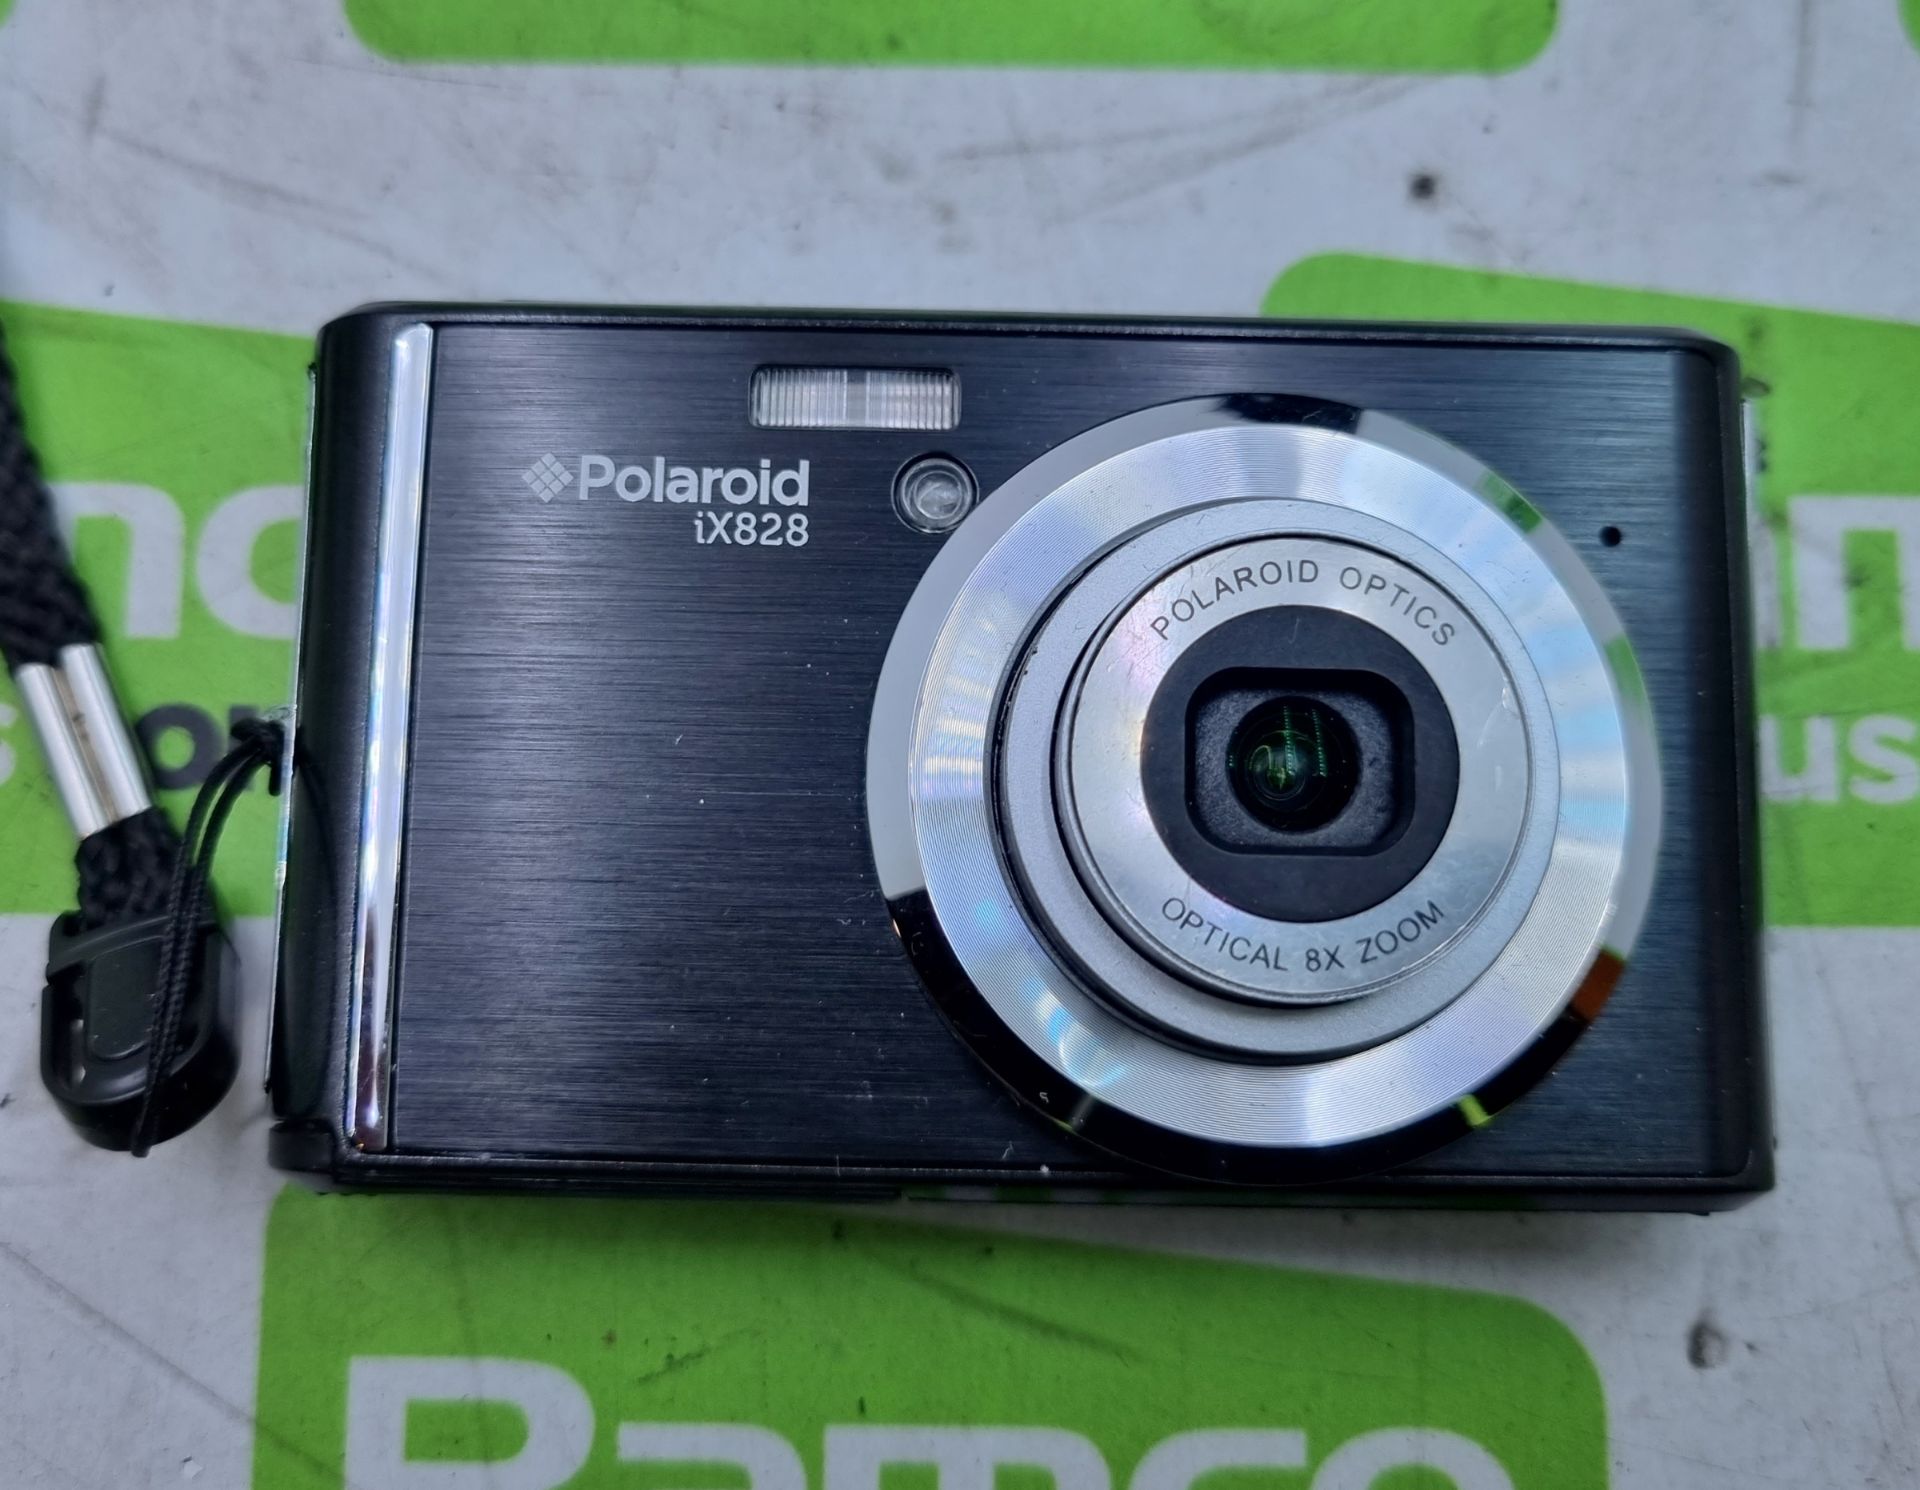 Polaroid iX828N digital camera - Image 4 of 6